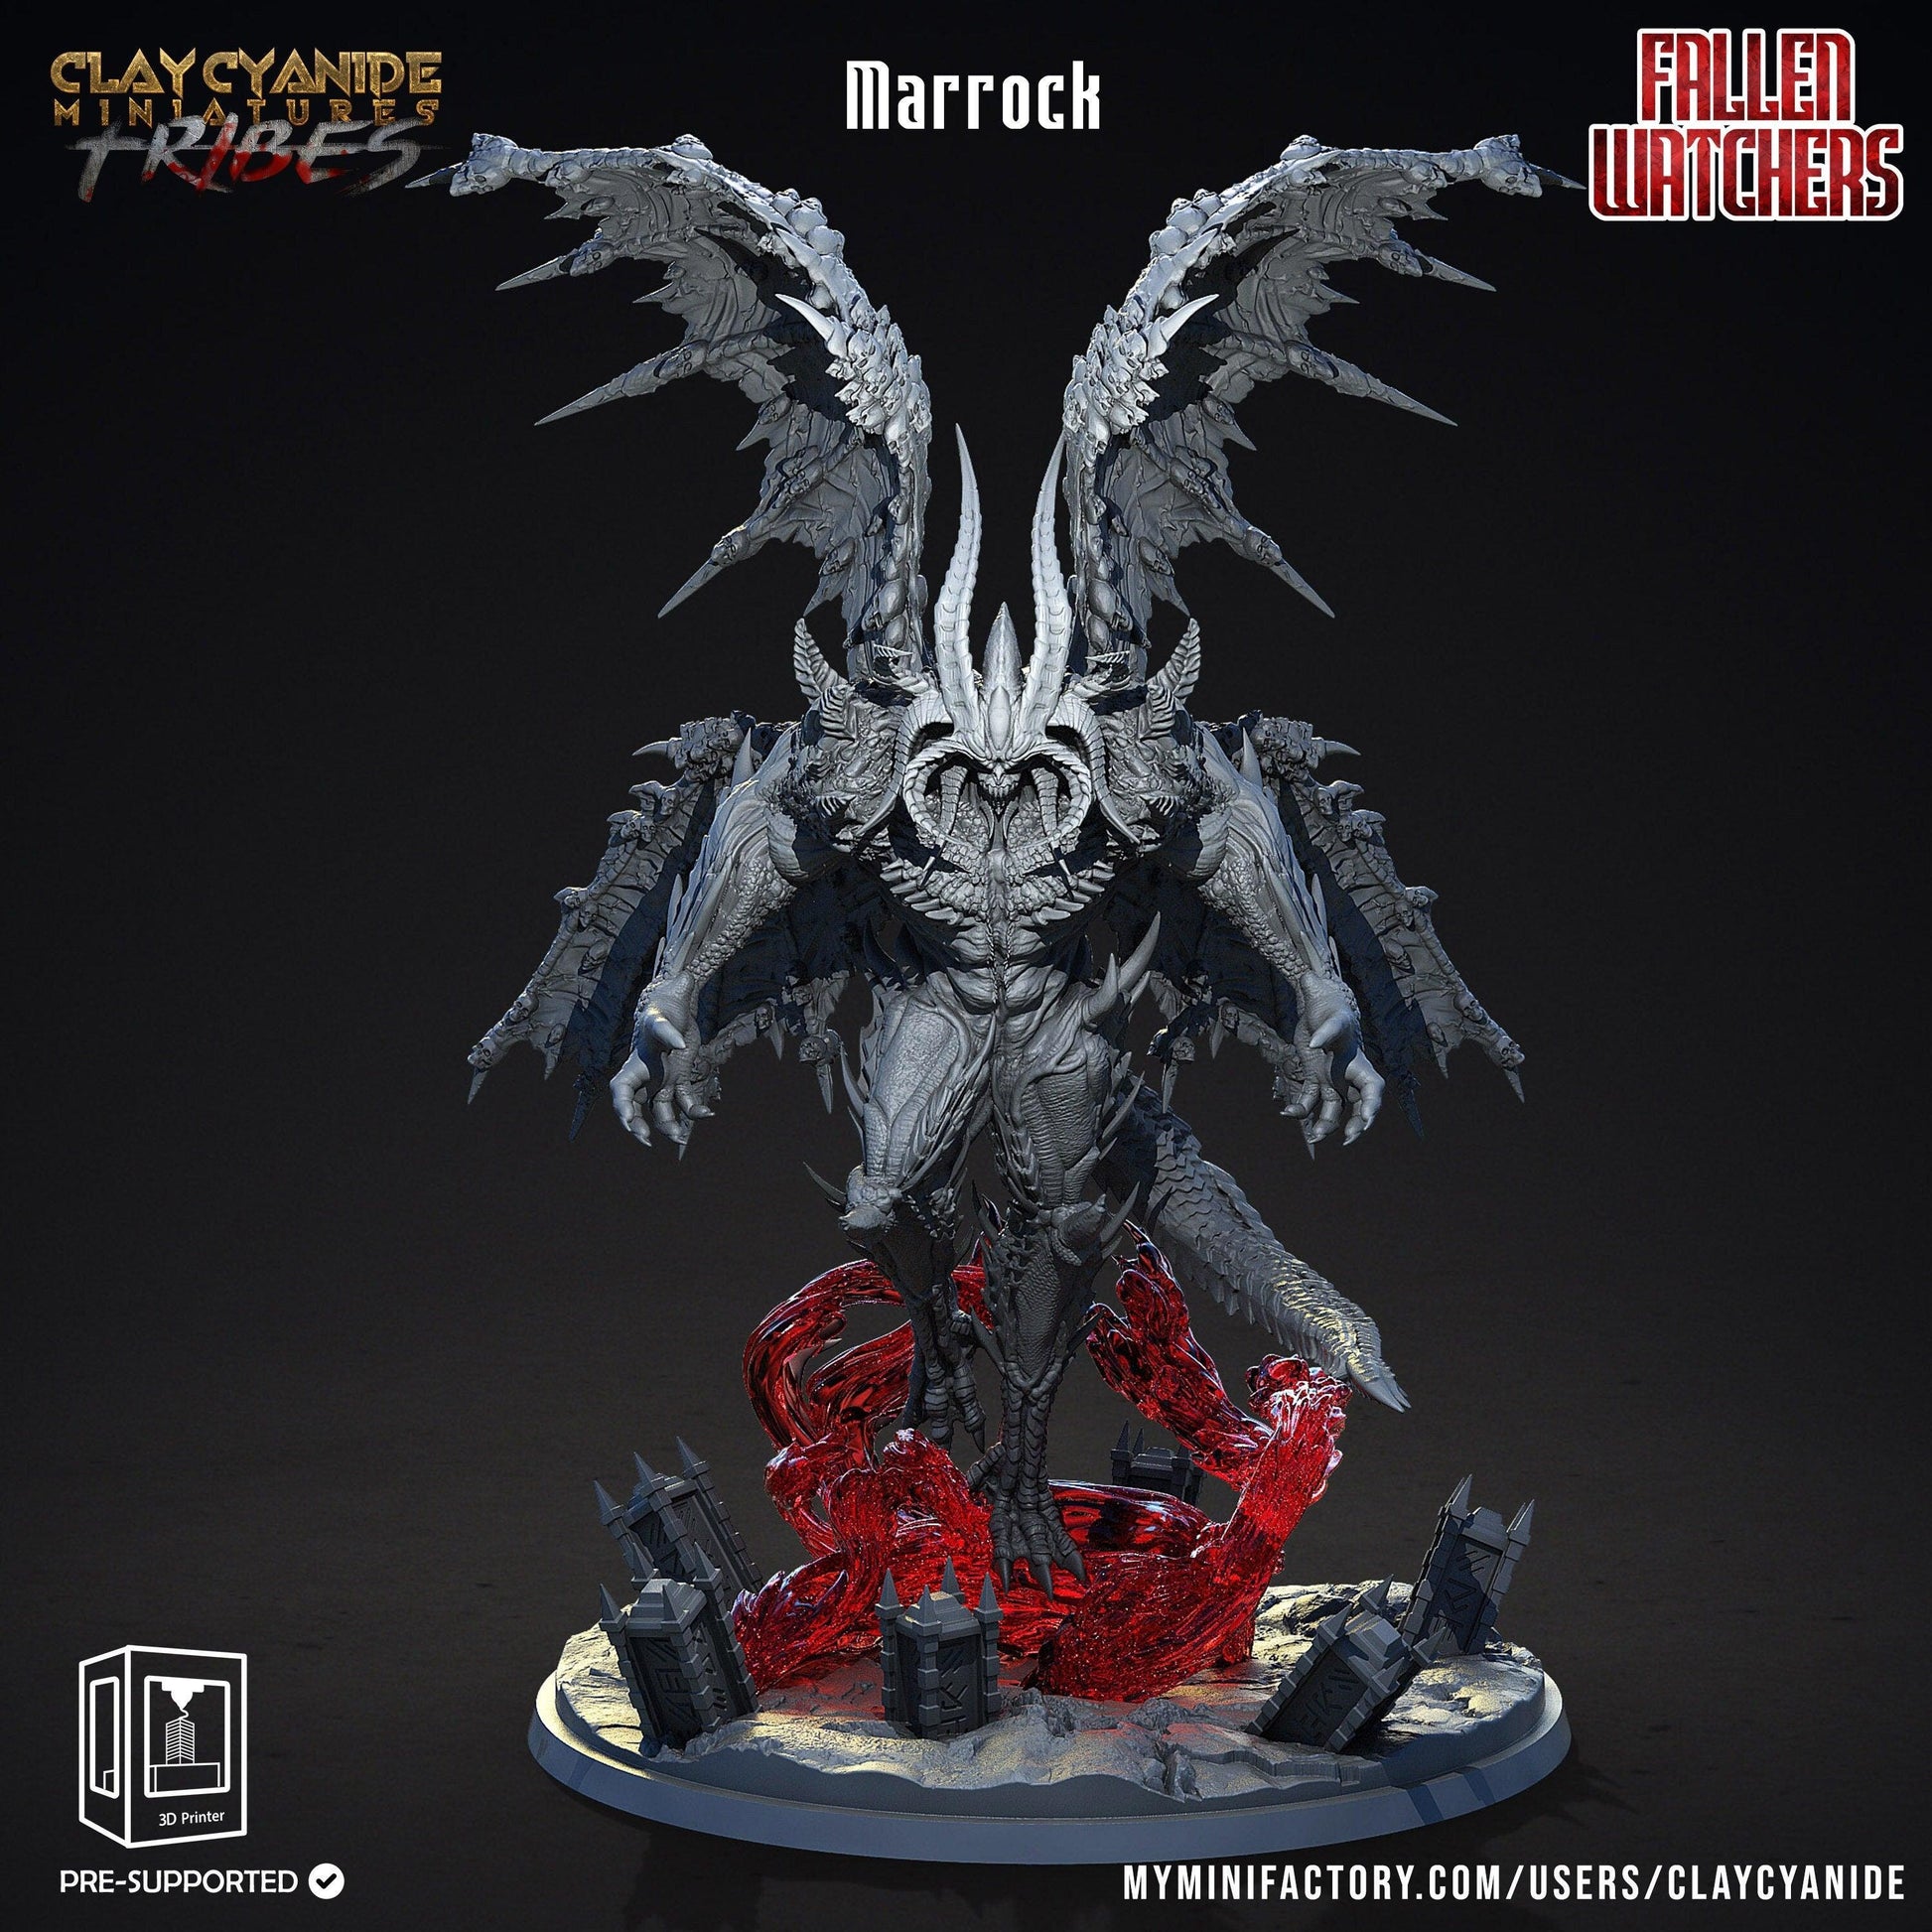 Demon miniature | Marrock Clay Cyanide | Fallen Watchers | DnD Miniature | Dungeons and Dragons, DnD 5e male succubus incubus - Plague Miniatures shop for DnD Miniatures